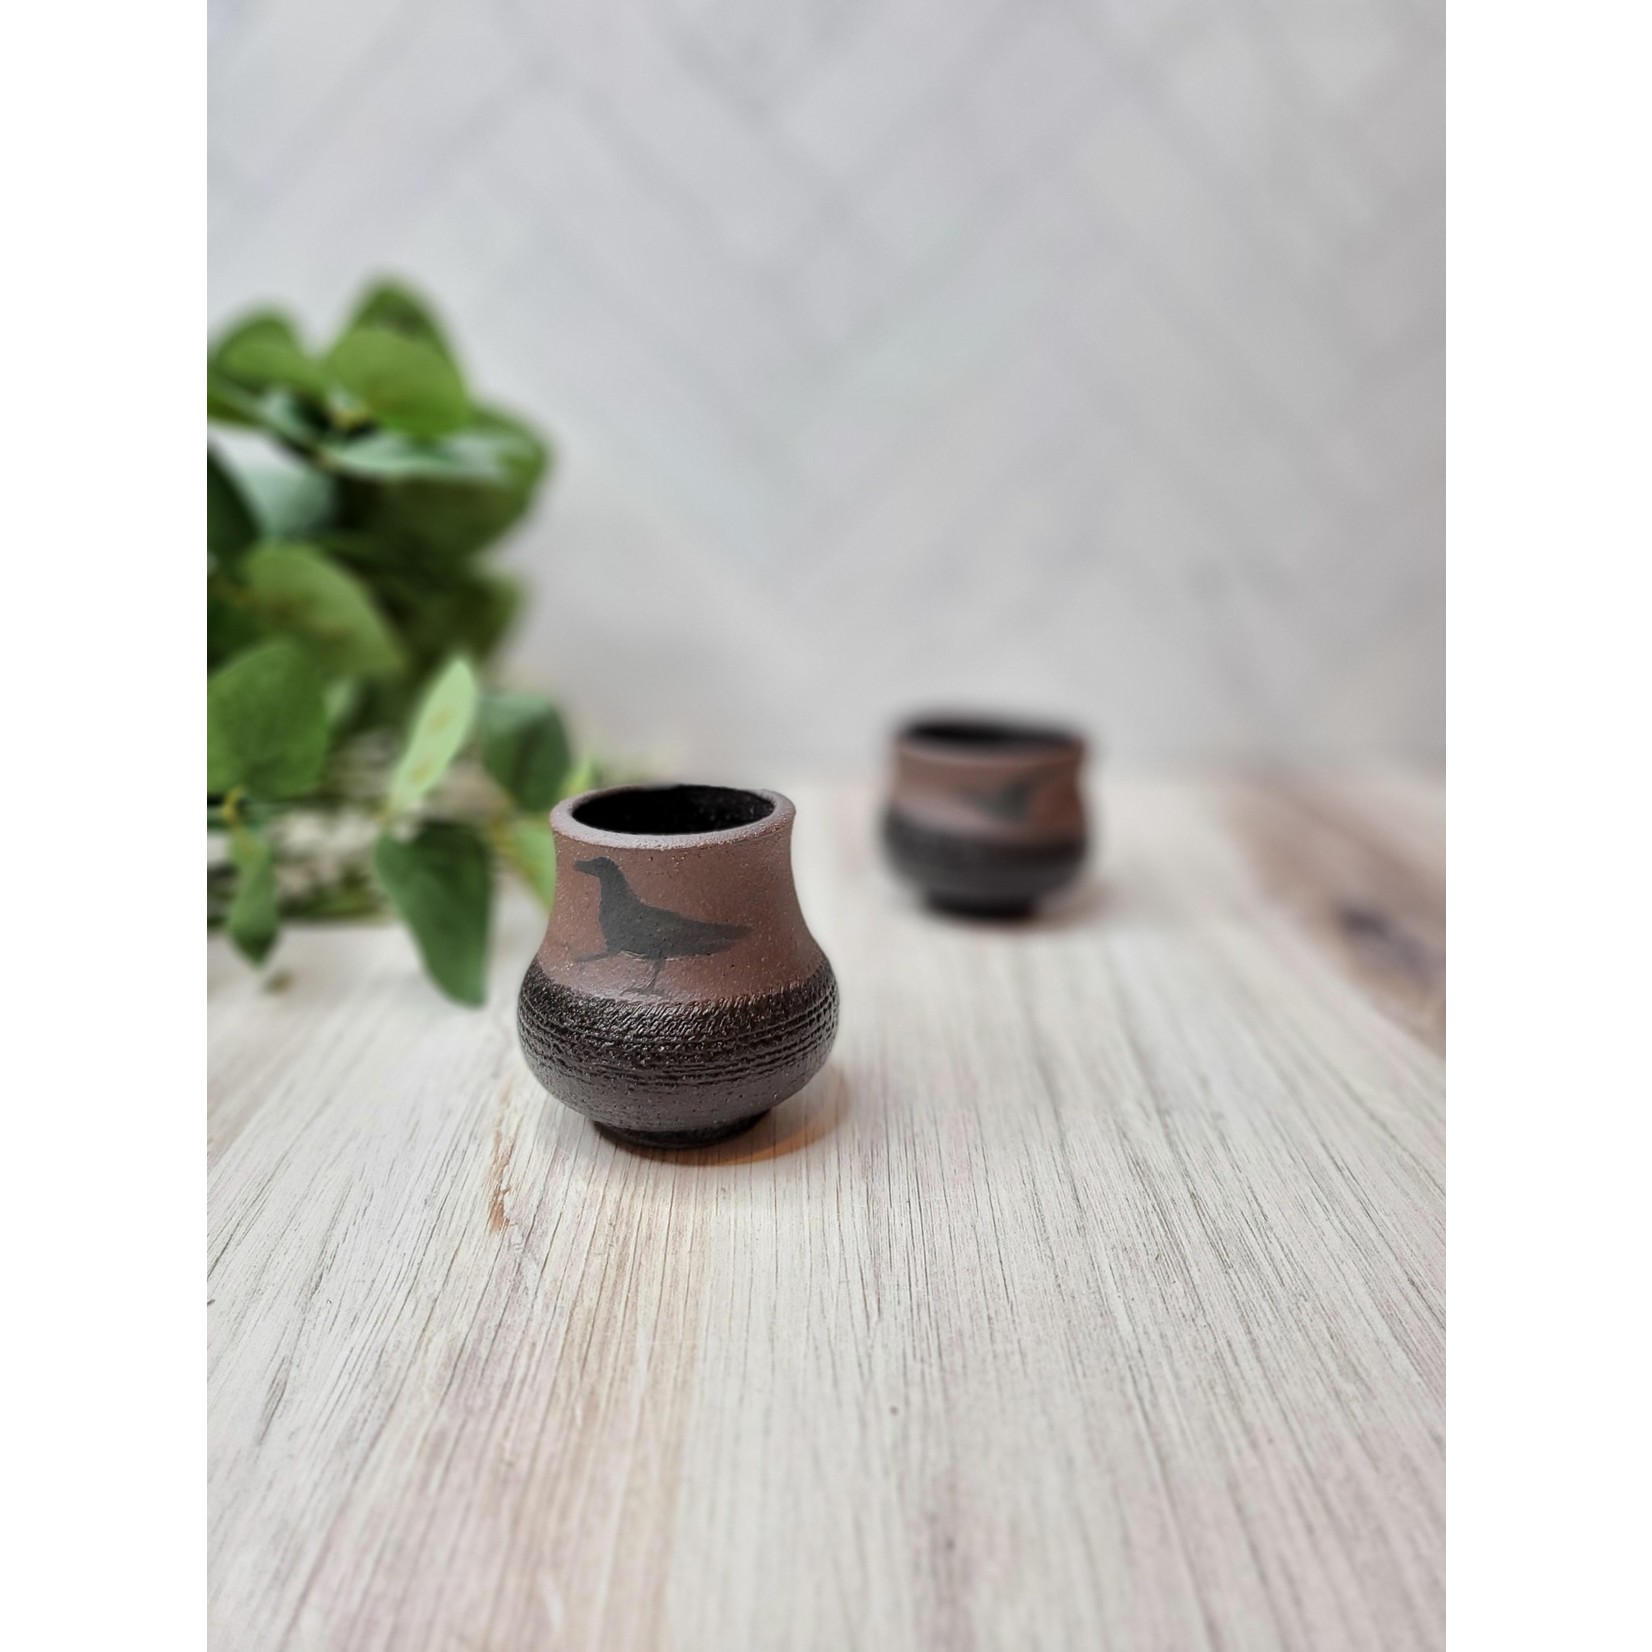 Elaine Randall "Littles" - small ceramic cup - black & brown clay - G